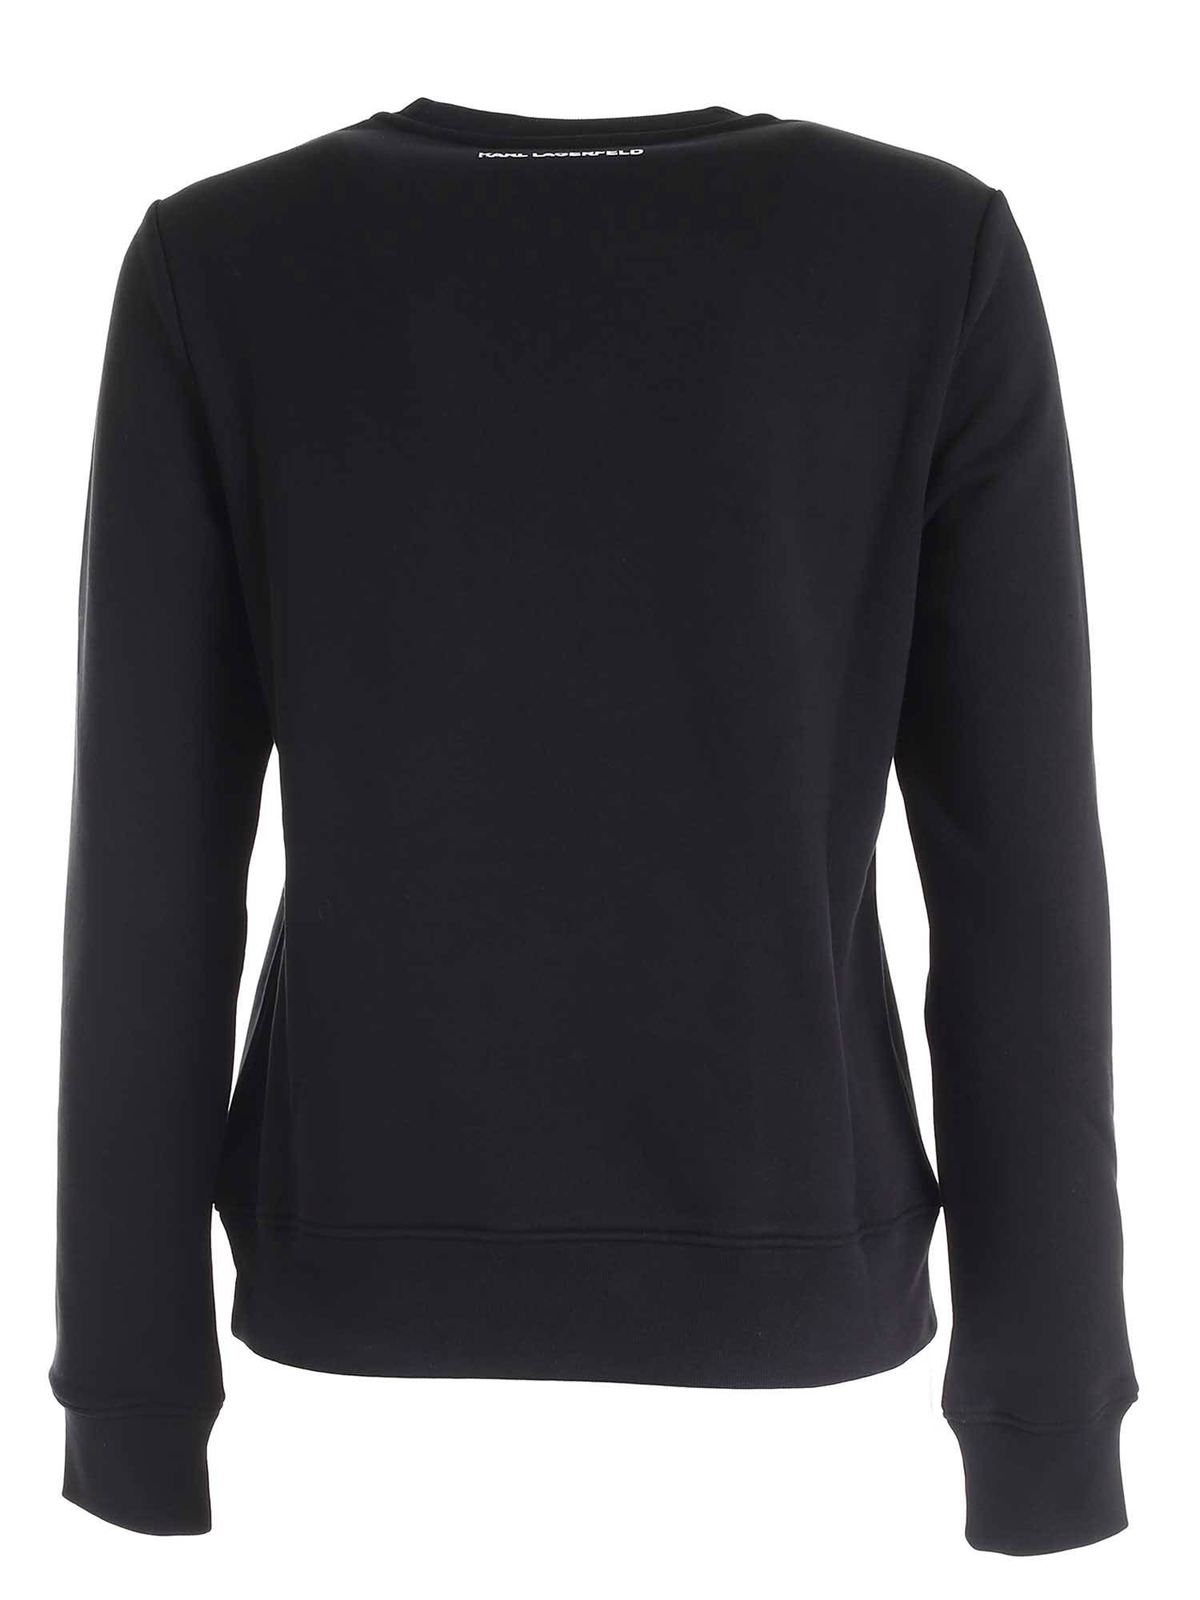 Karl Lagerfeld - Karl Legend sweatshirt in black - Sweatshirts ...